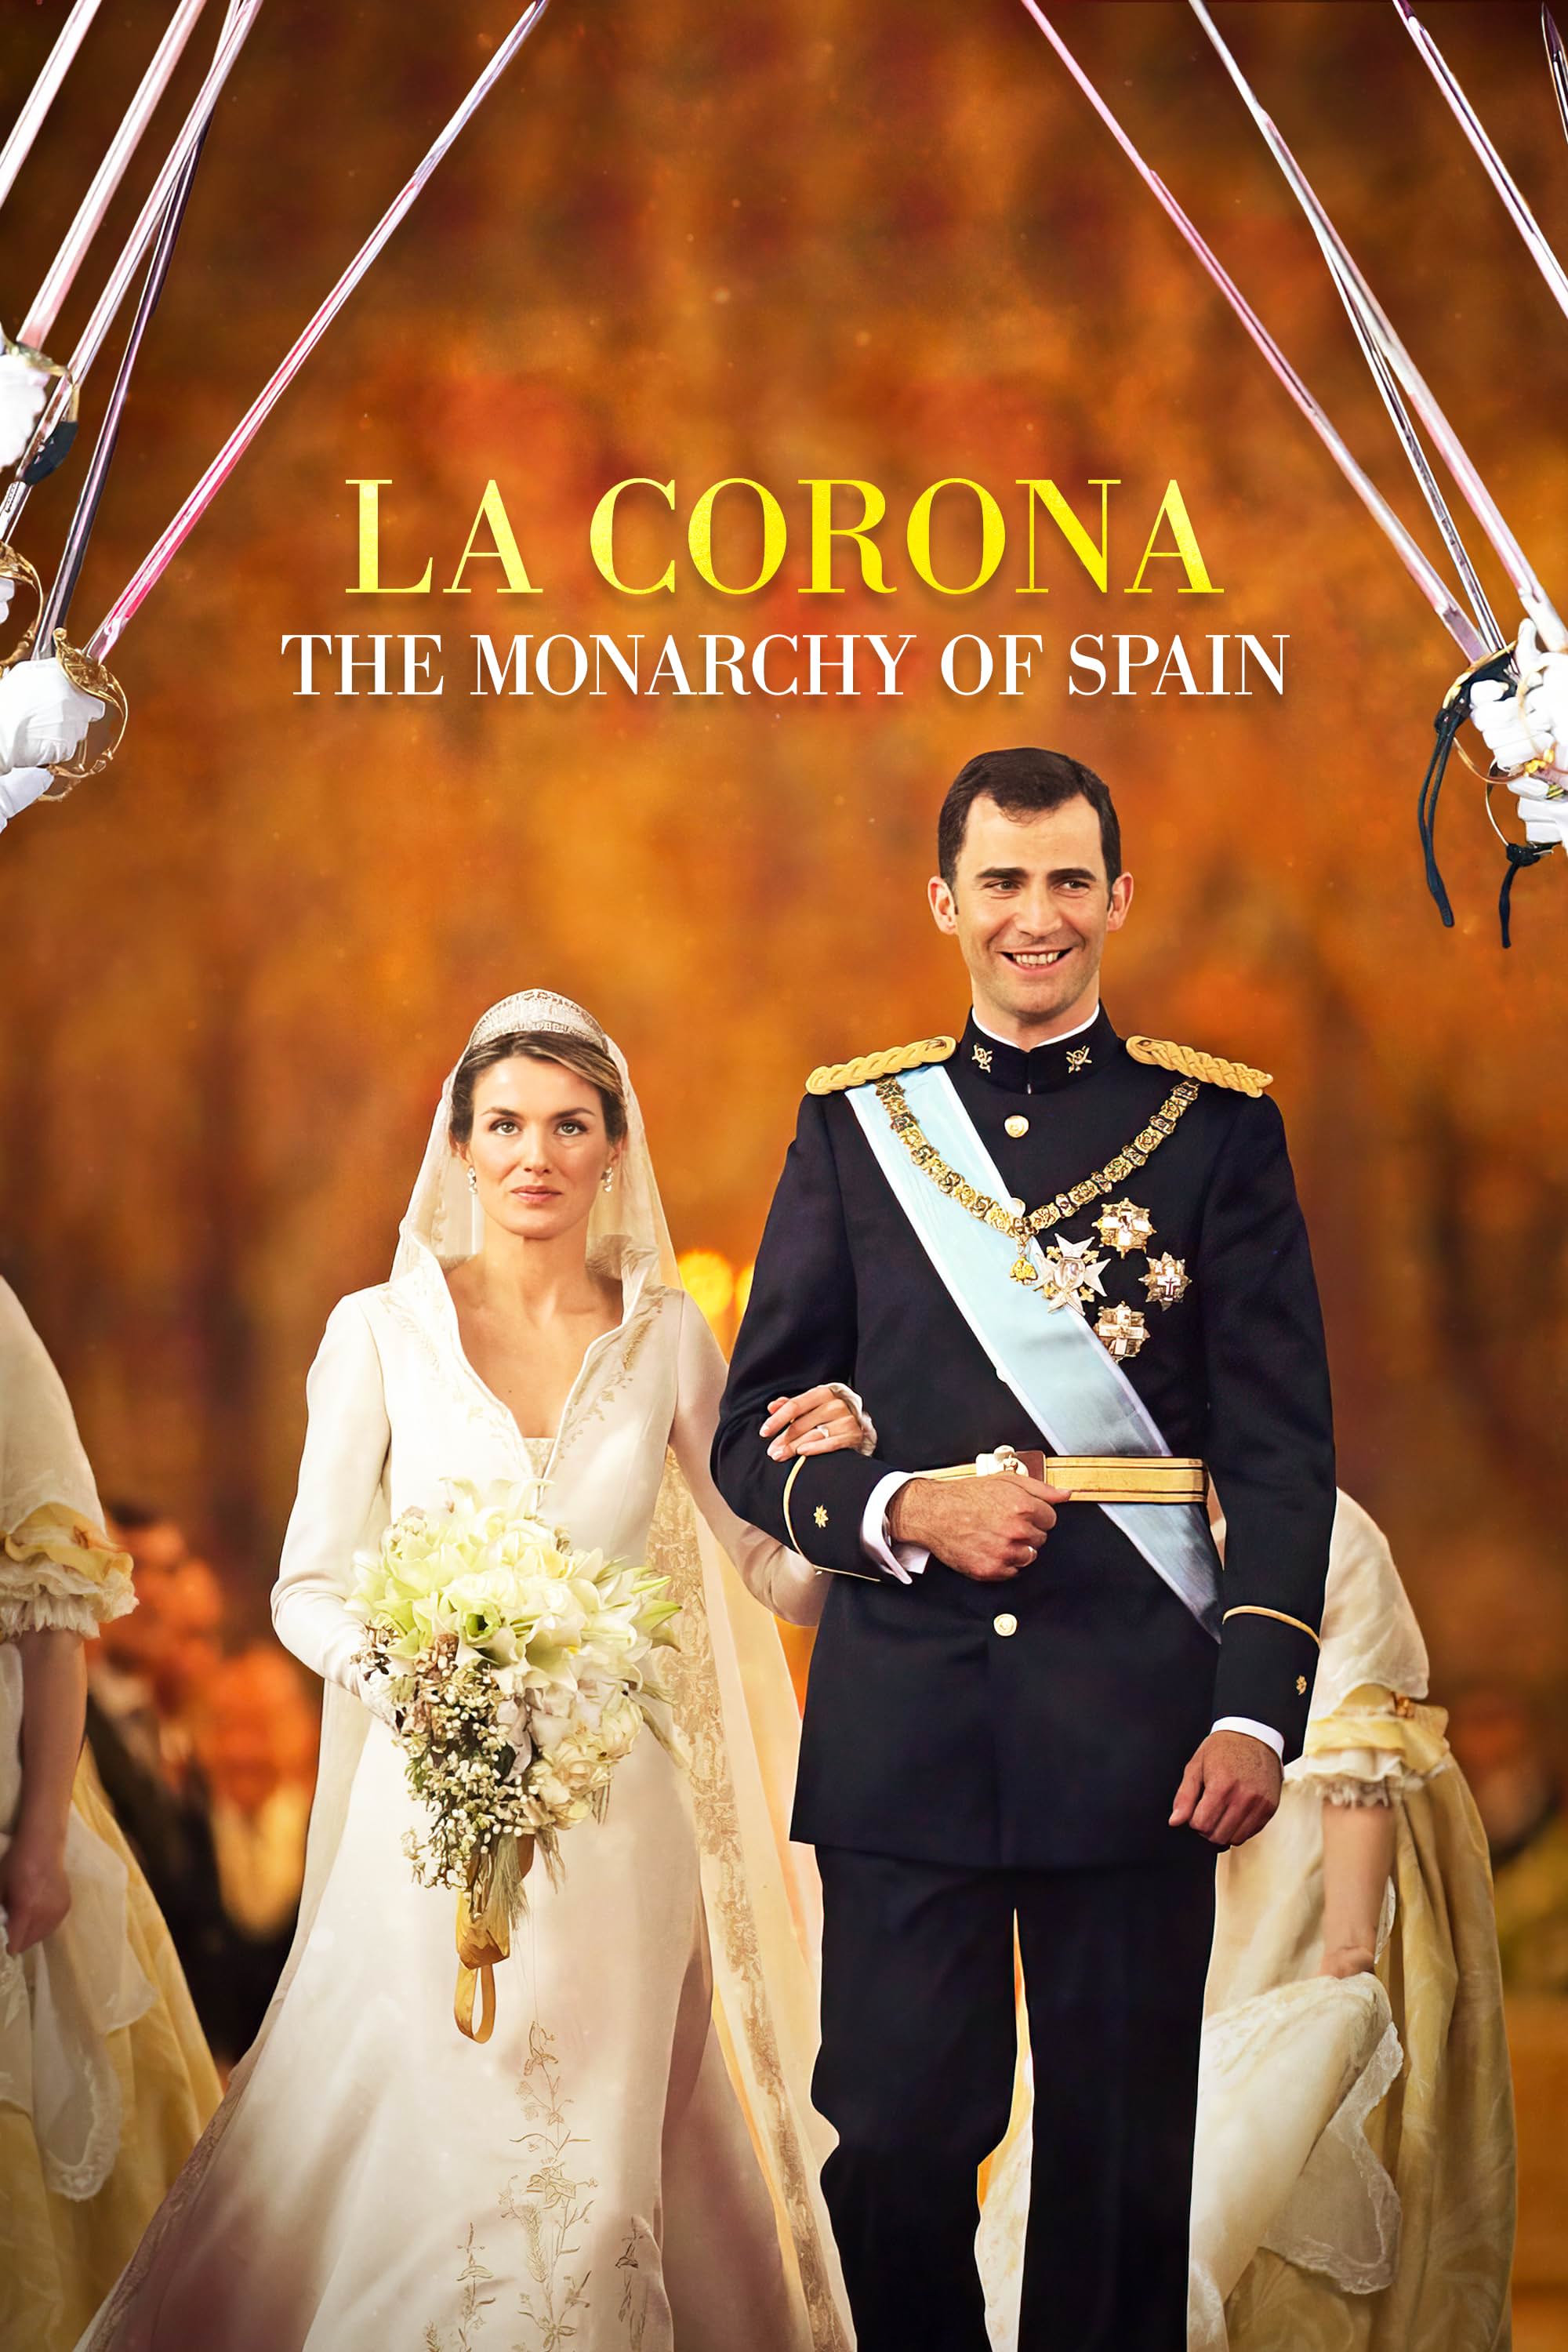     La Corona: The Monarchy of Spain